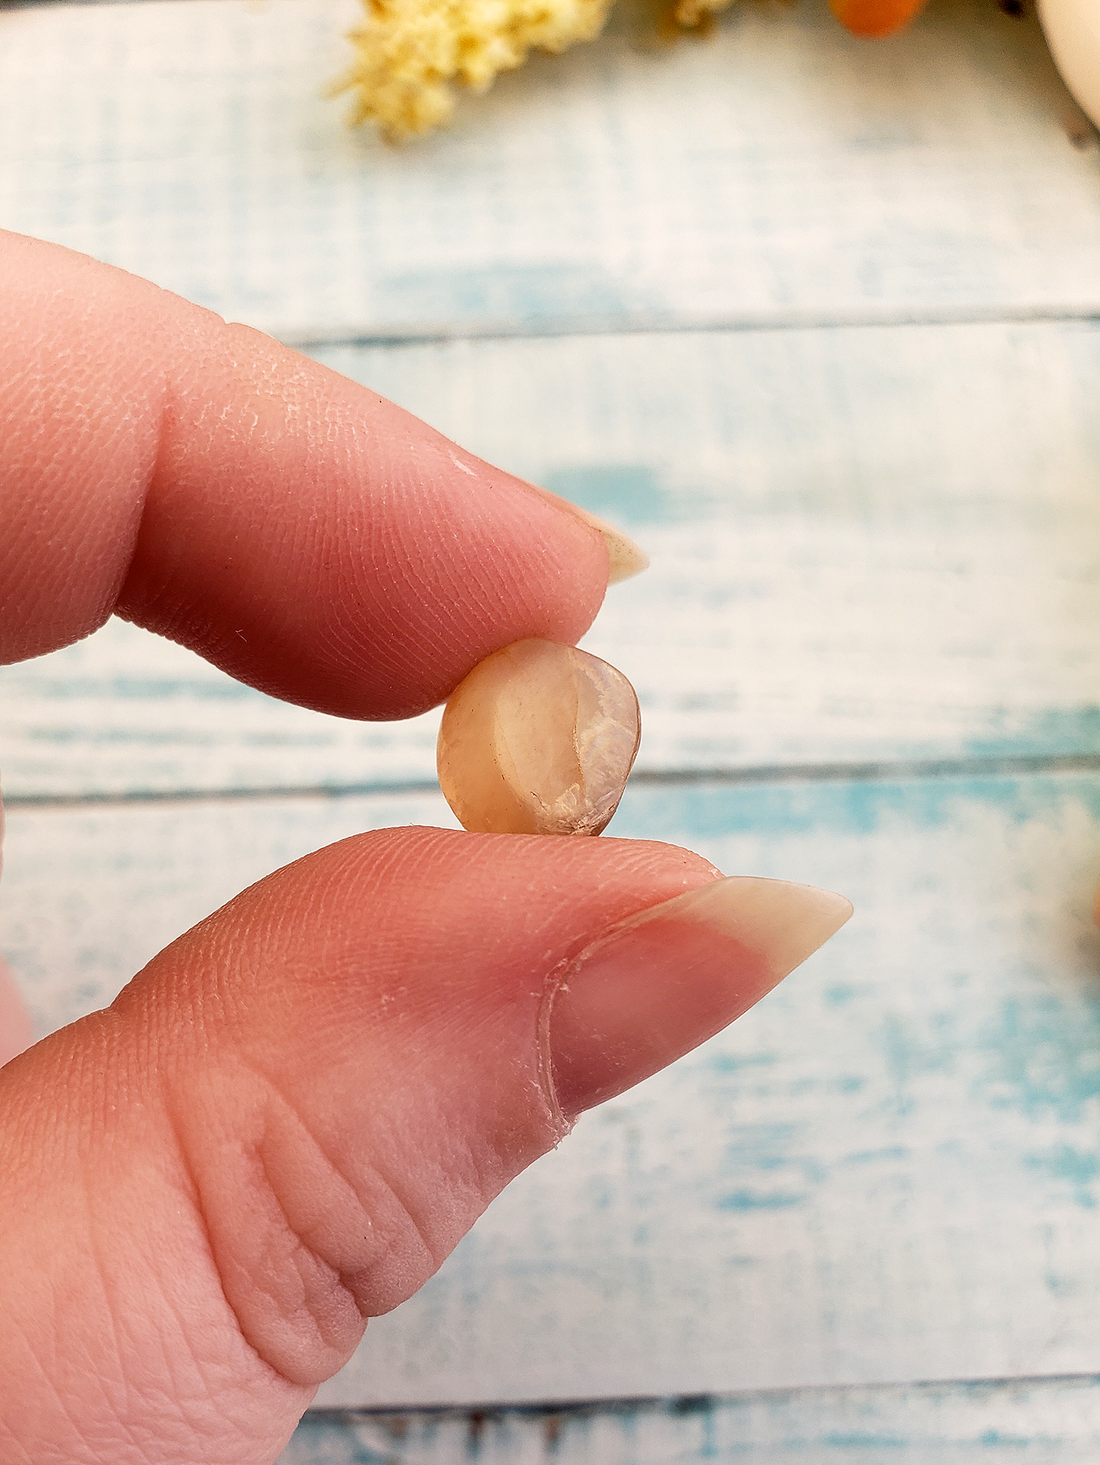 Mini Moonstone Tumbled Gemstone - Multi Stone or Bulk Wholesale Lots - Mini Stone Up Close